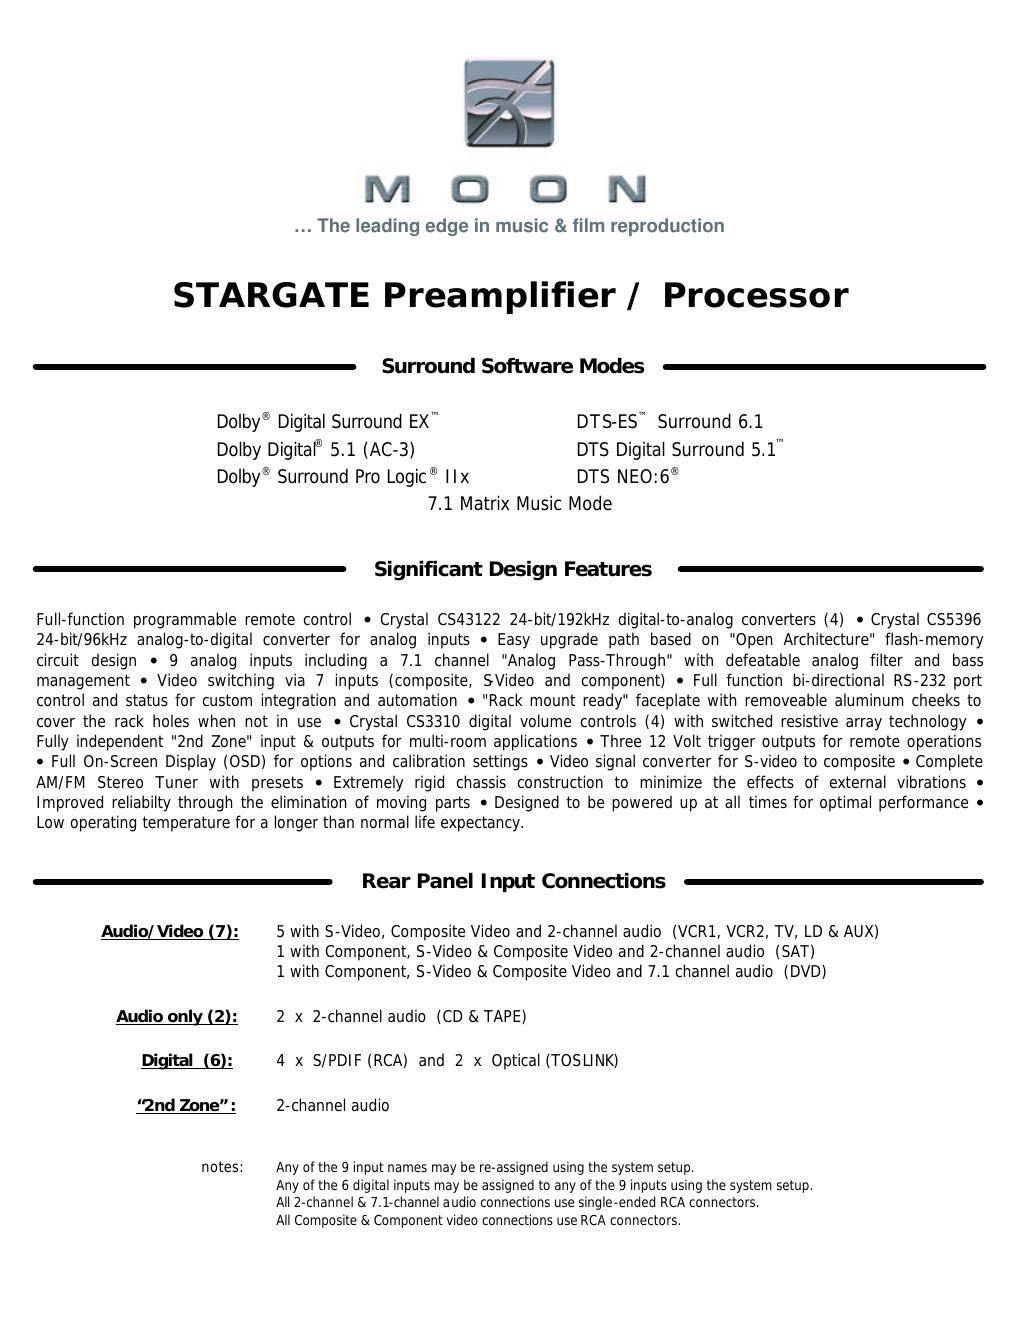 moon stargate brochure